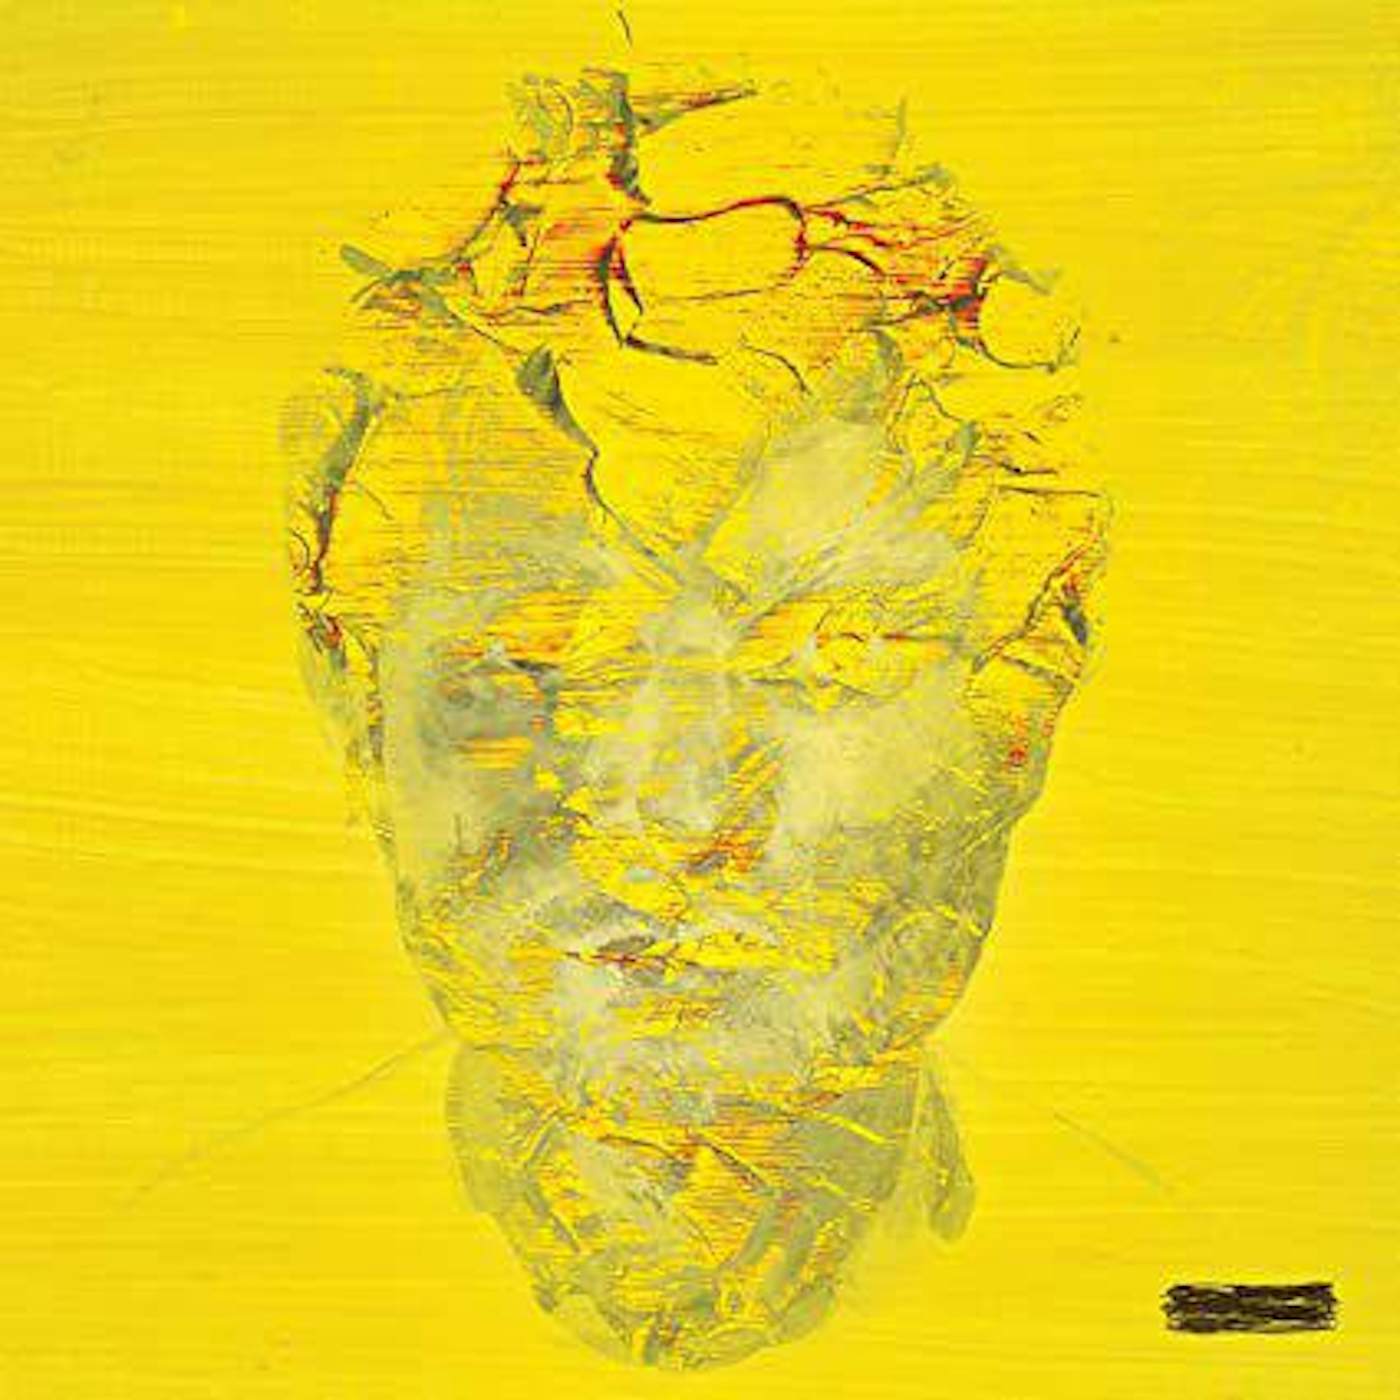 Ed Sheeran  - (Yellow) Vinyl Record